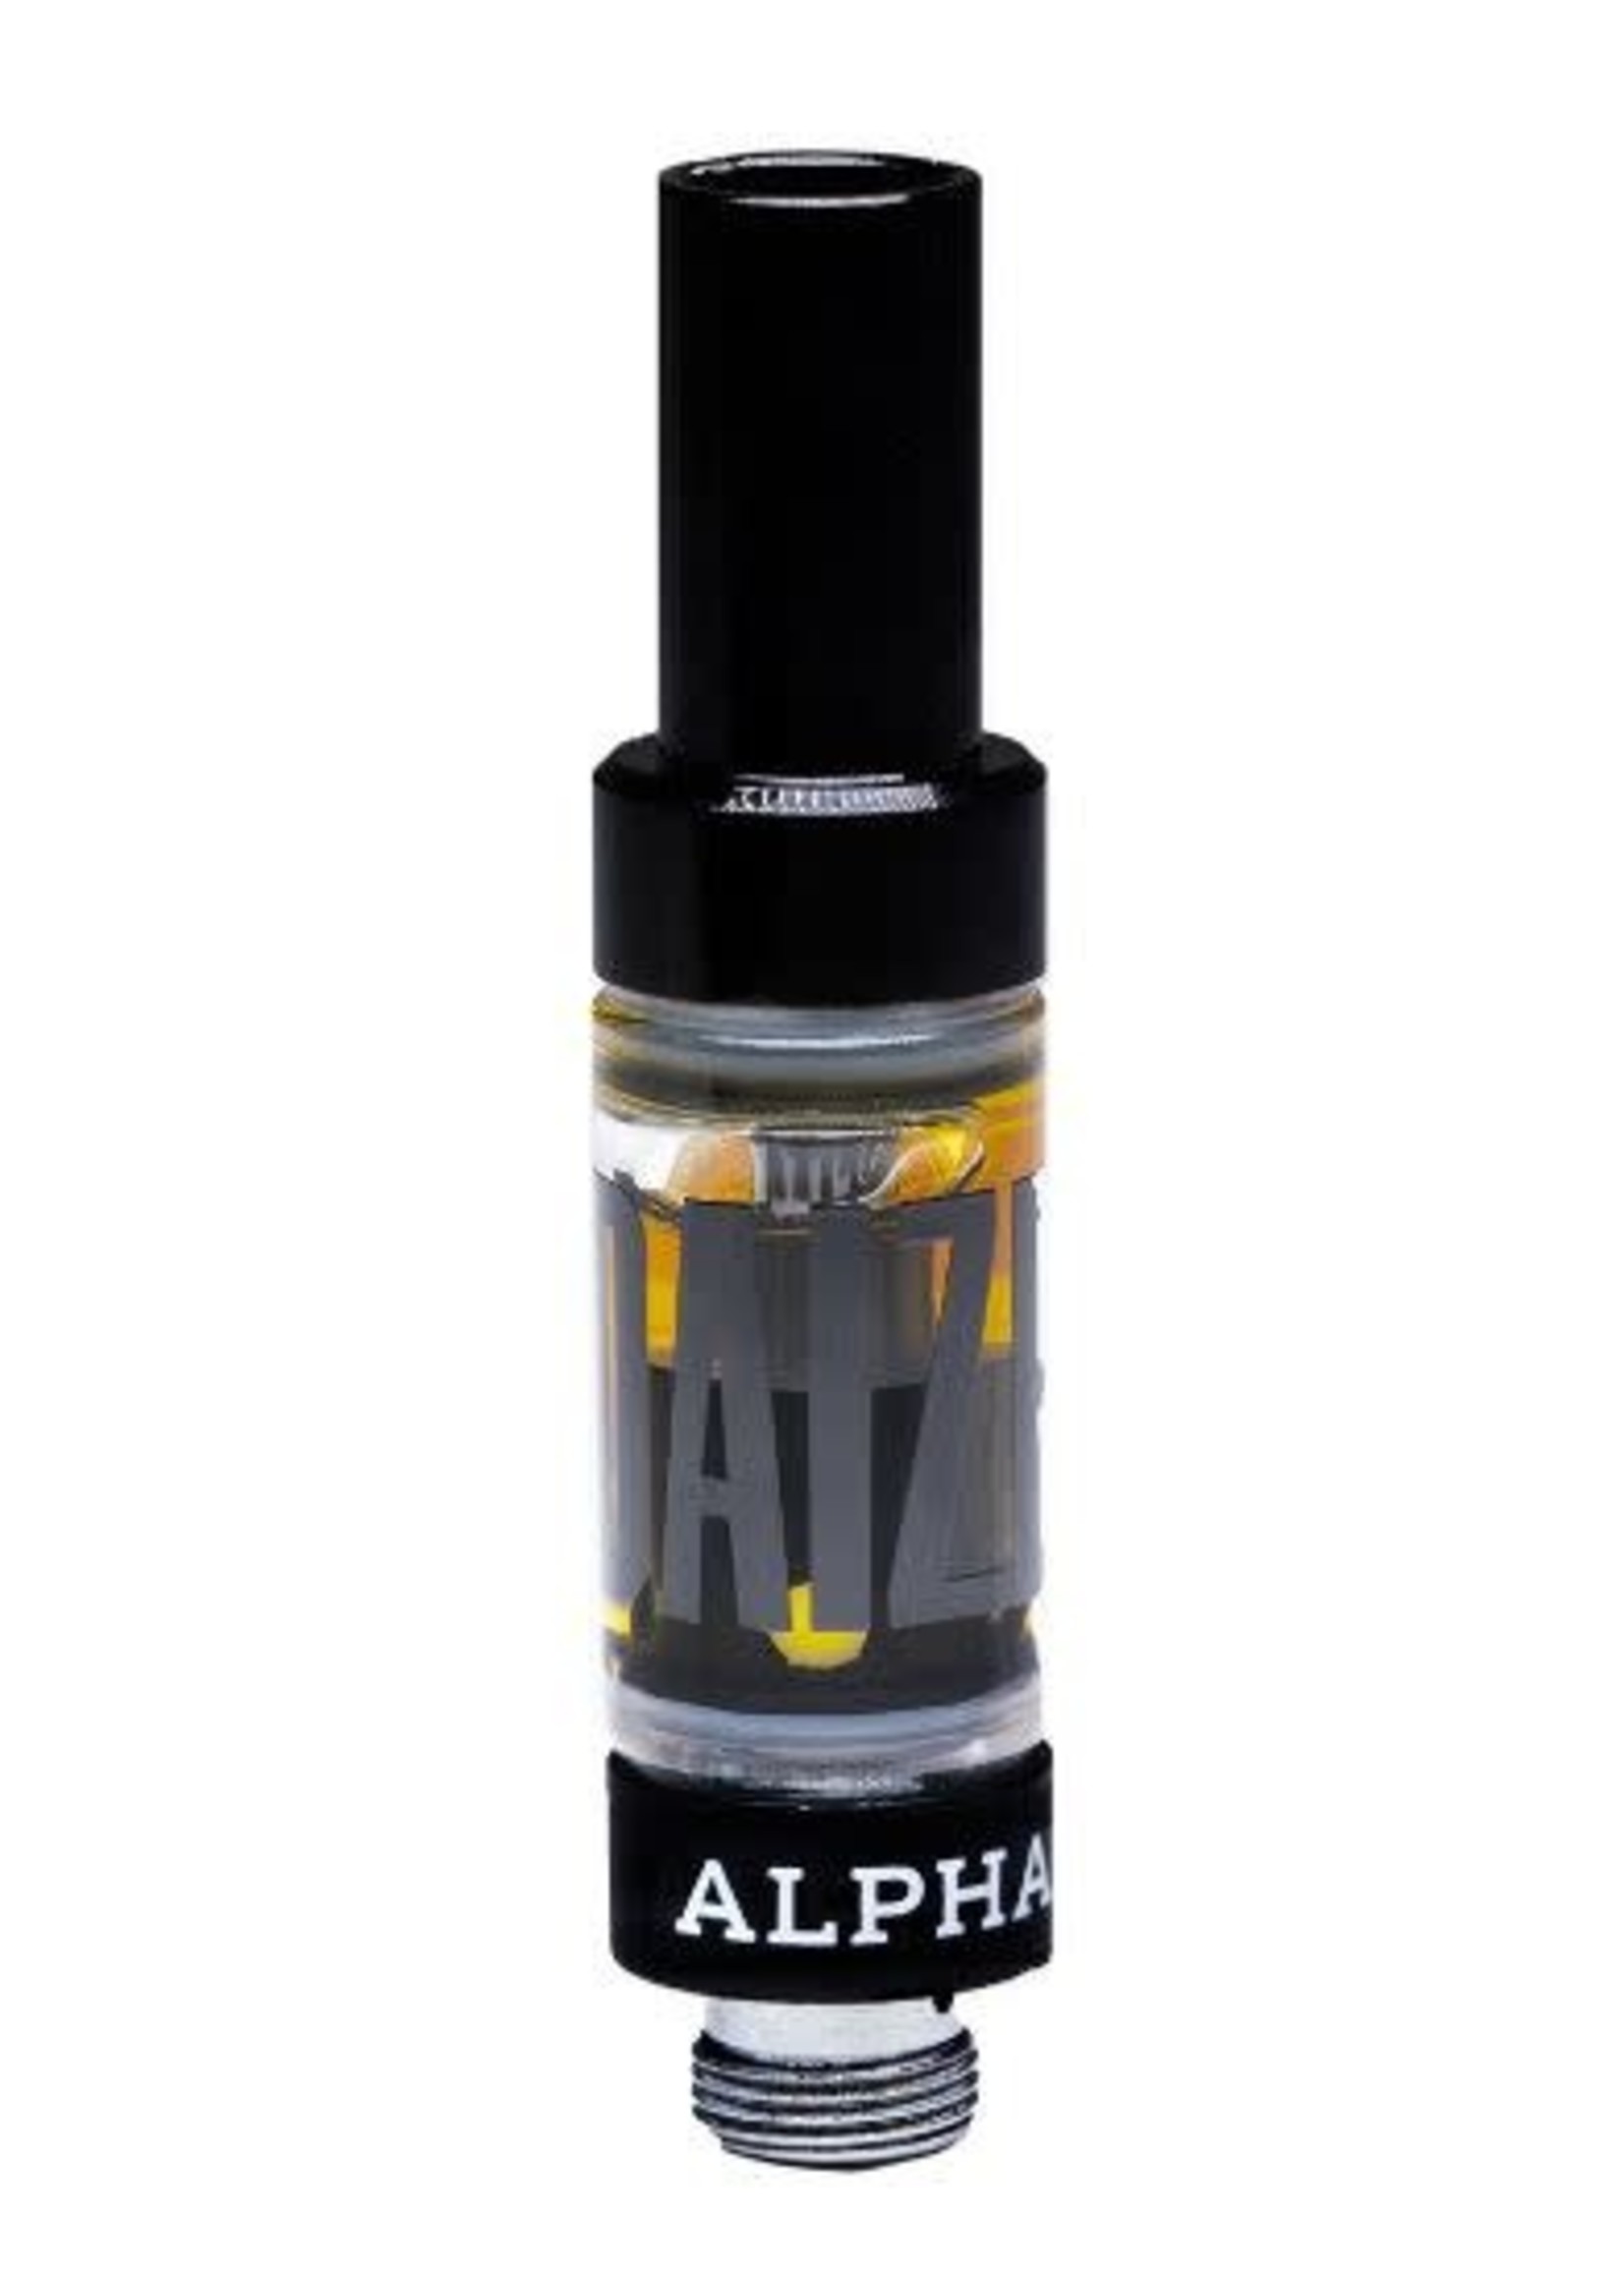 DAIZE Alpha Berry Full Spectrum 510 Thread Cartridge